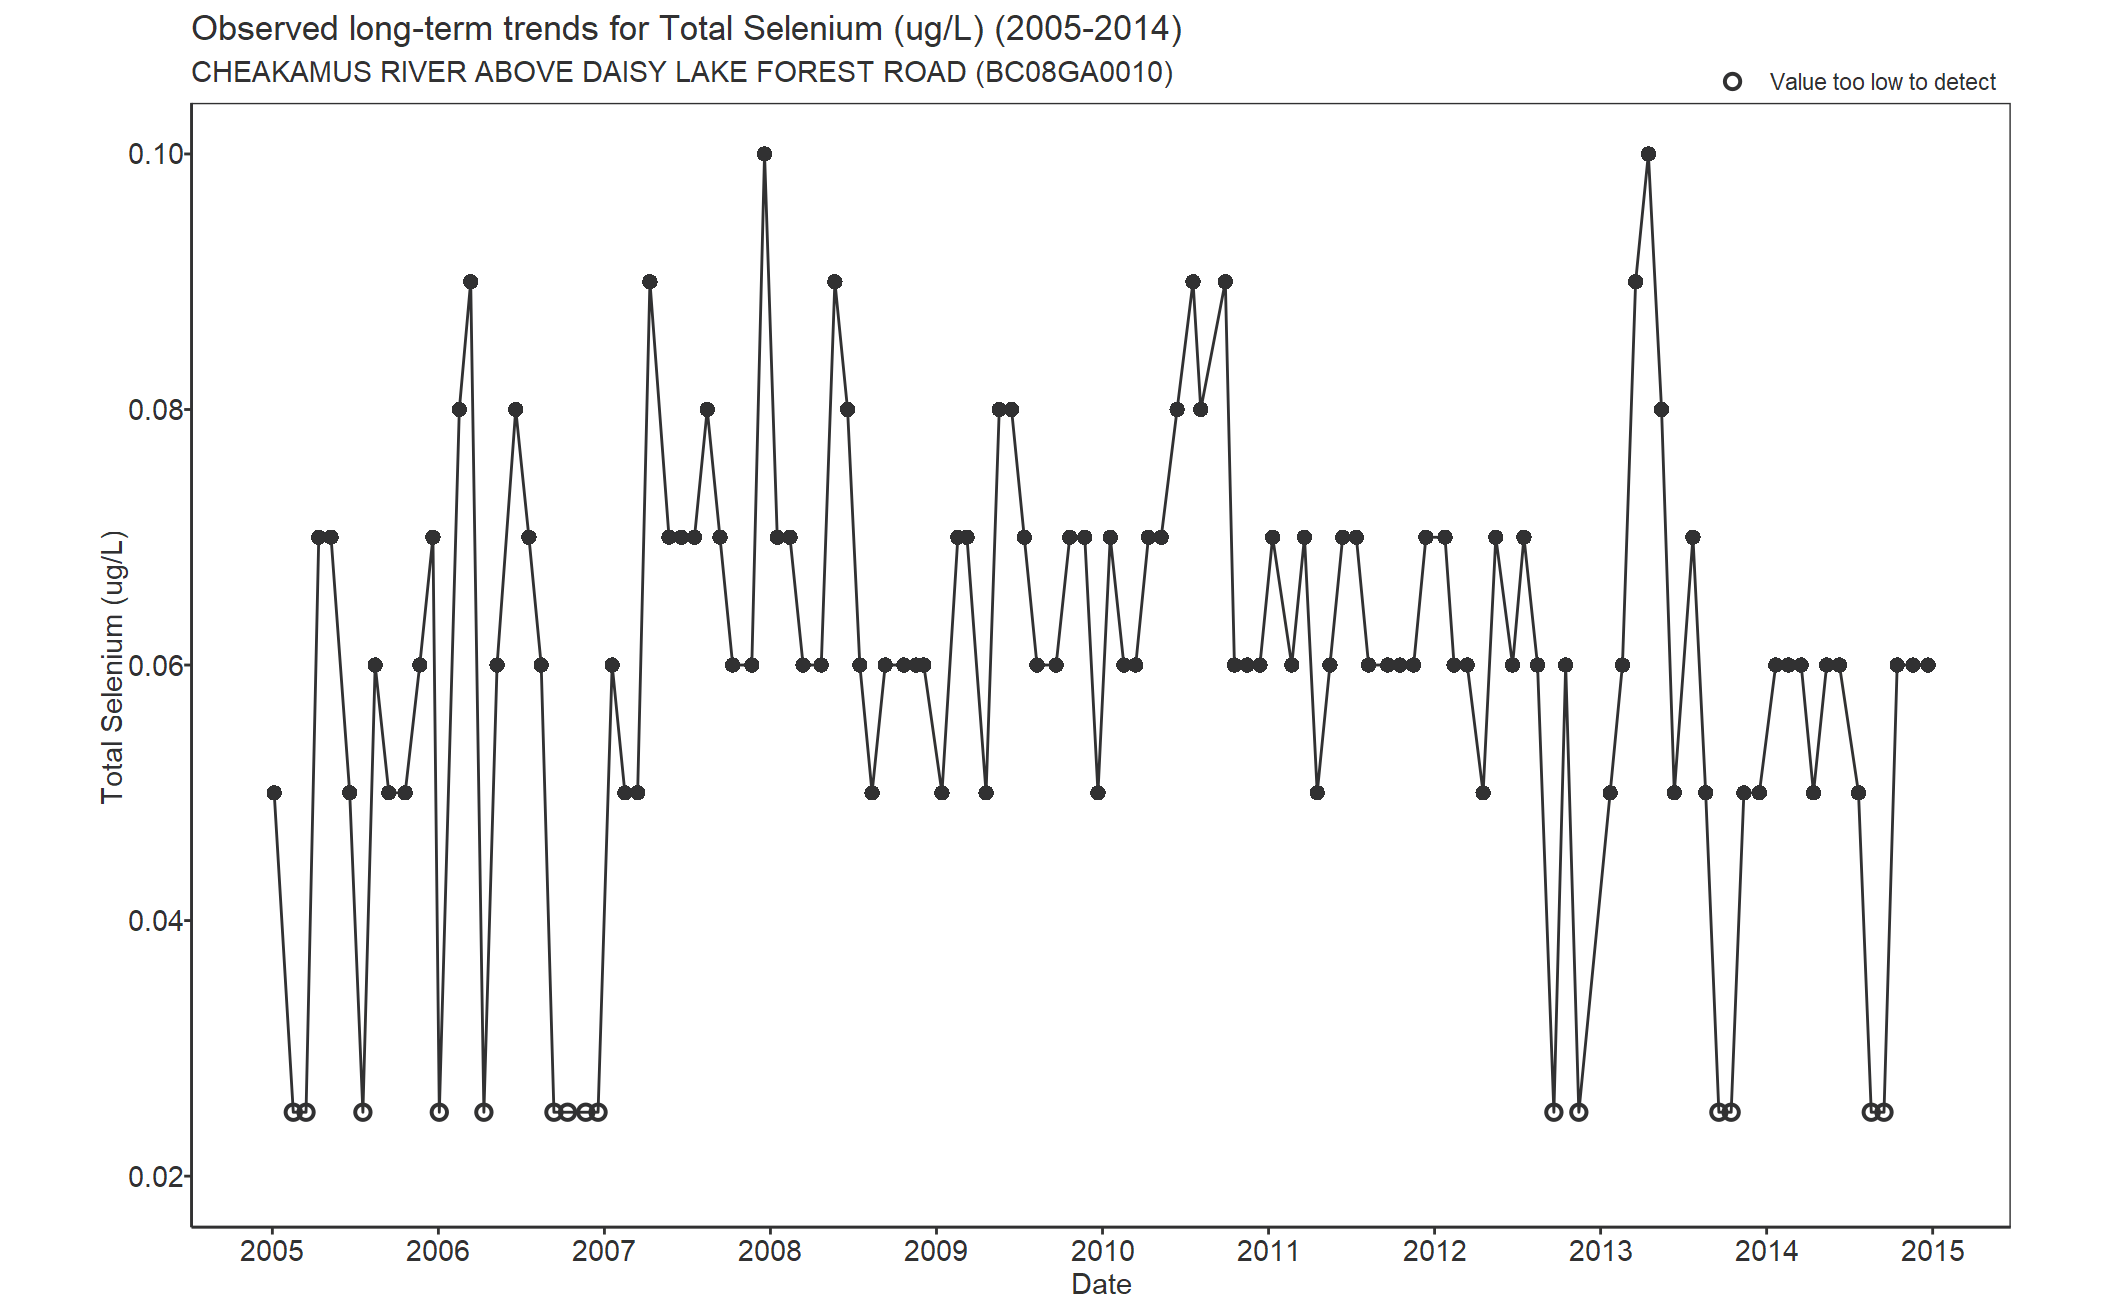 Observed long-term trends for Total Selenium (2005-2014)